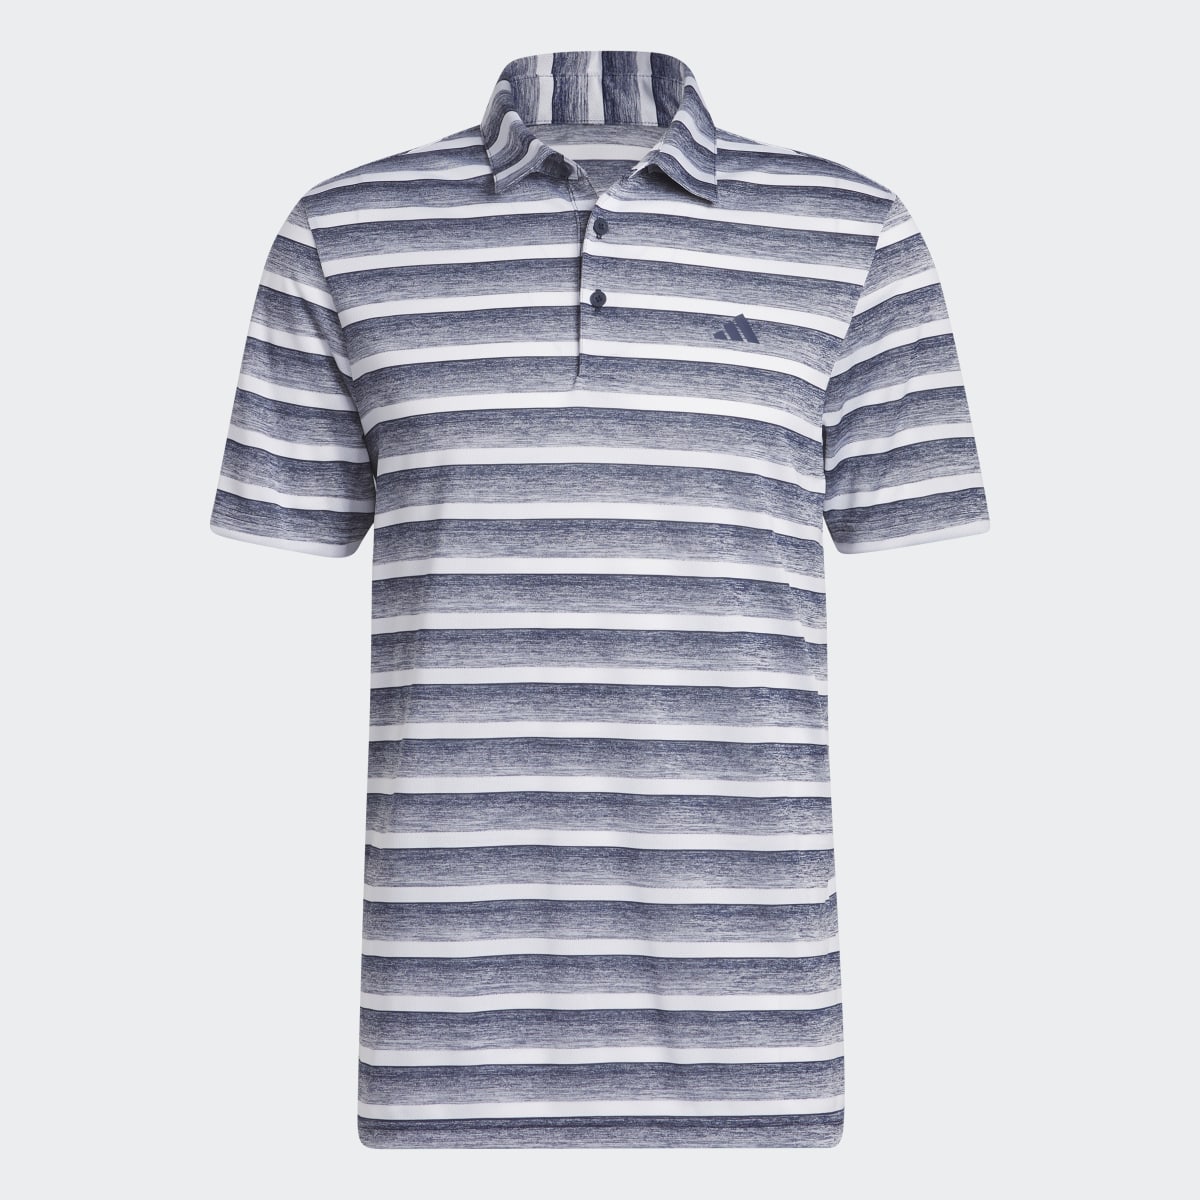 Adidas Two-Color Striped Golf Polo Shirt. 5